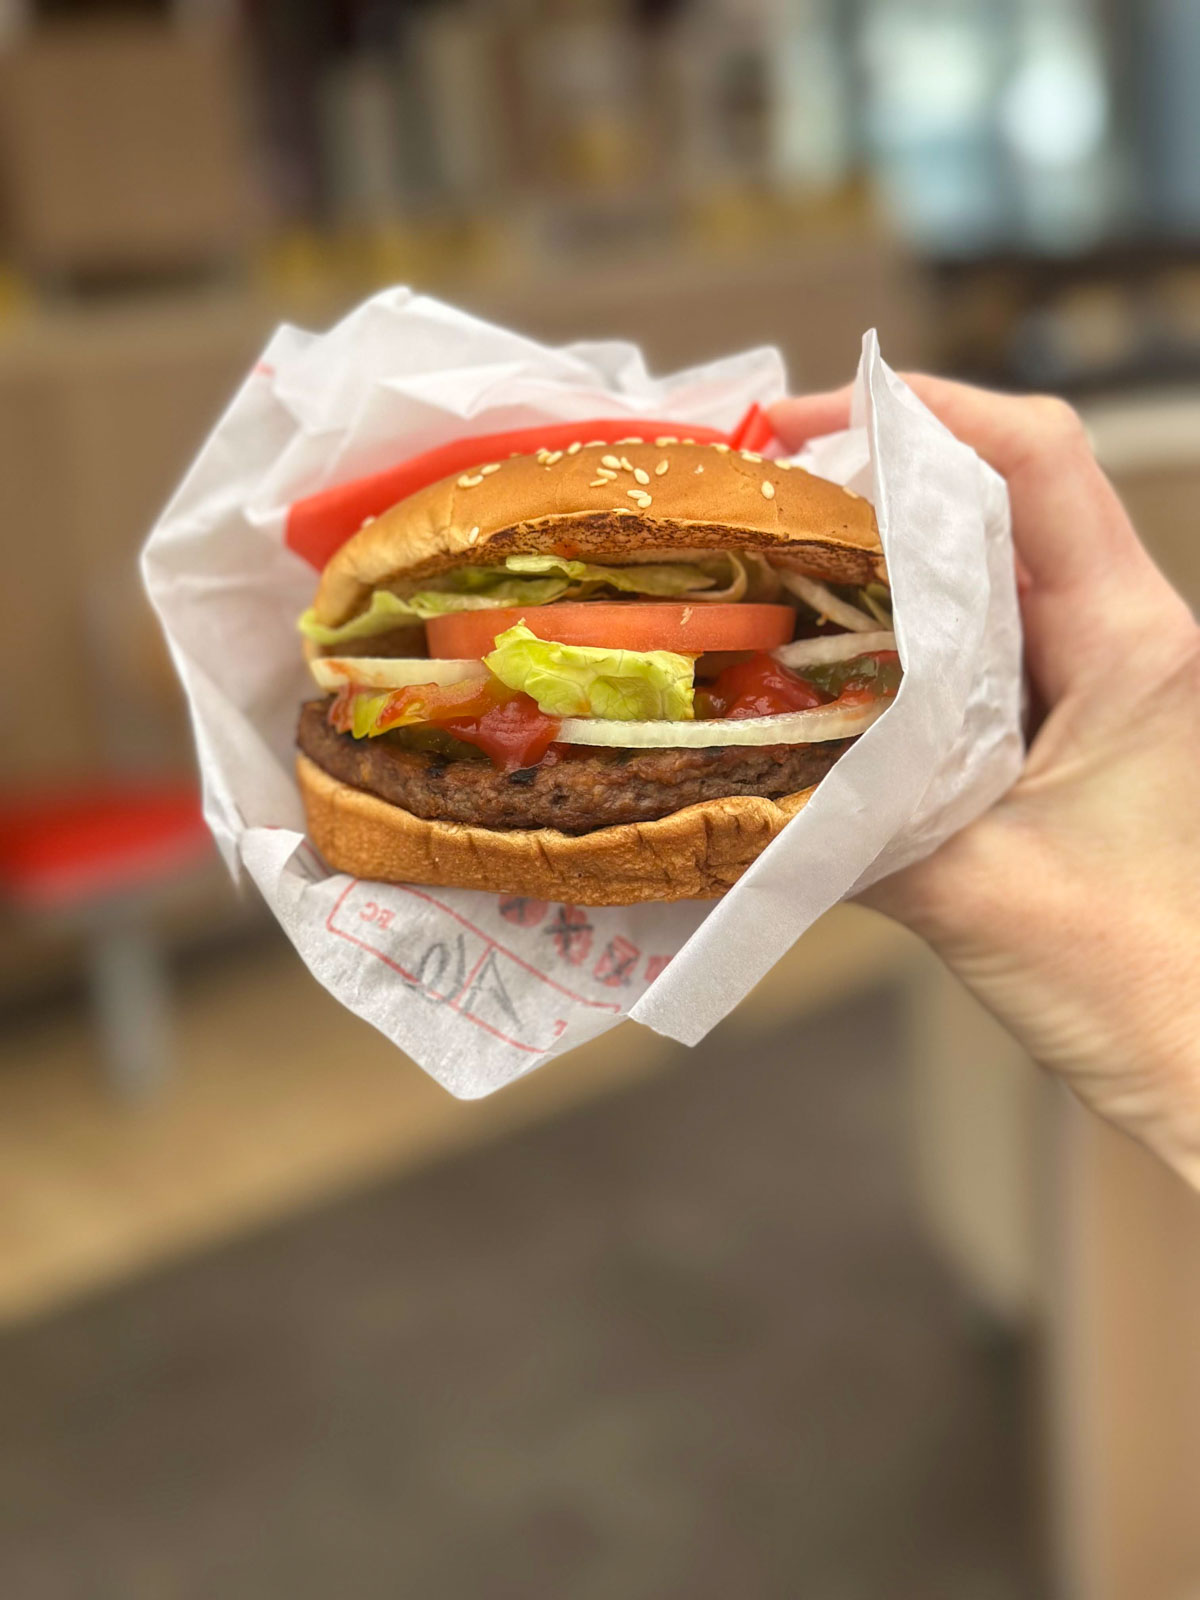 The vegan Impossible Burger, available at Burger King.